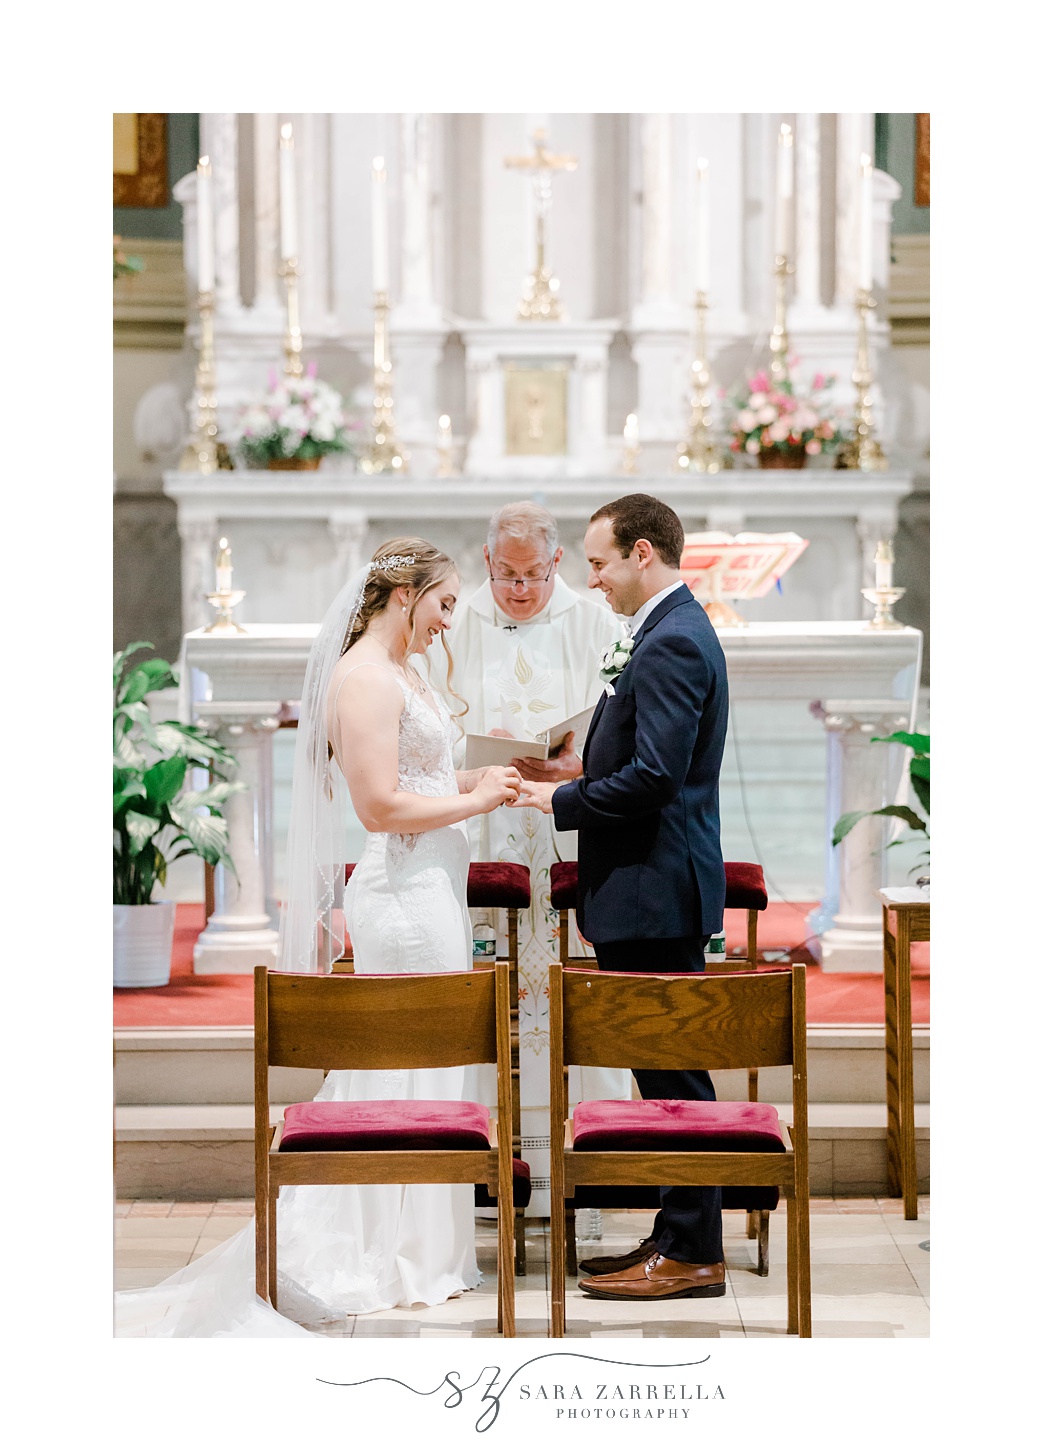 newlyweds exchange rings during traditional Catholic Church wedding in Rhode Island